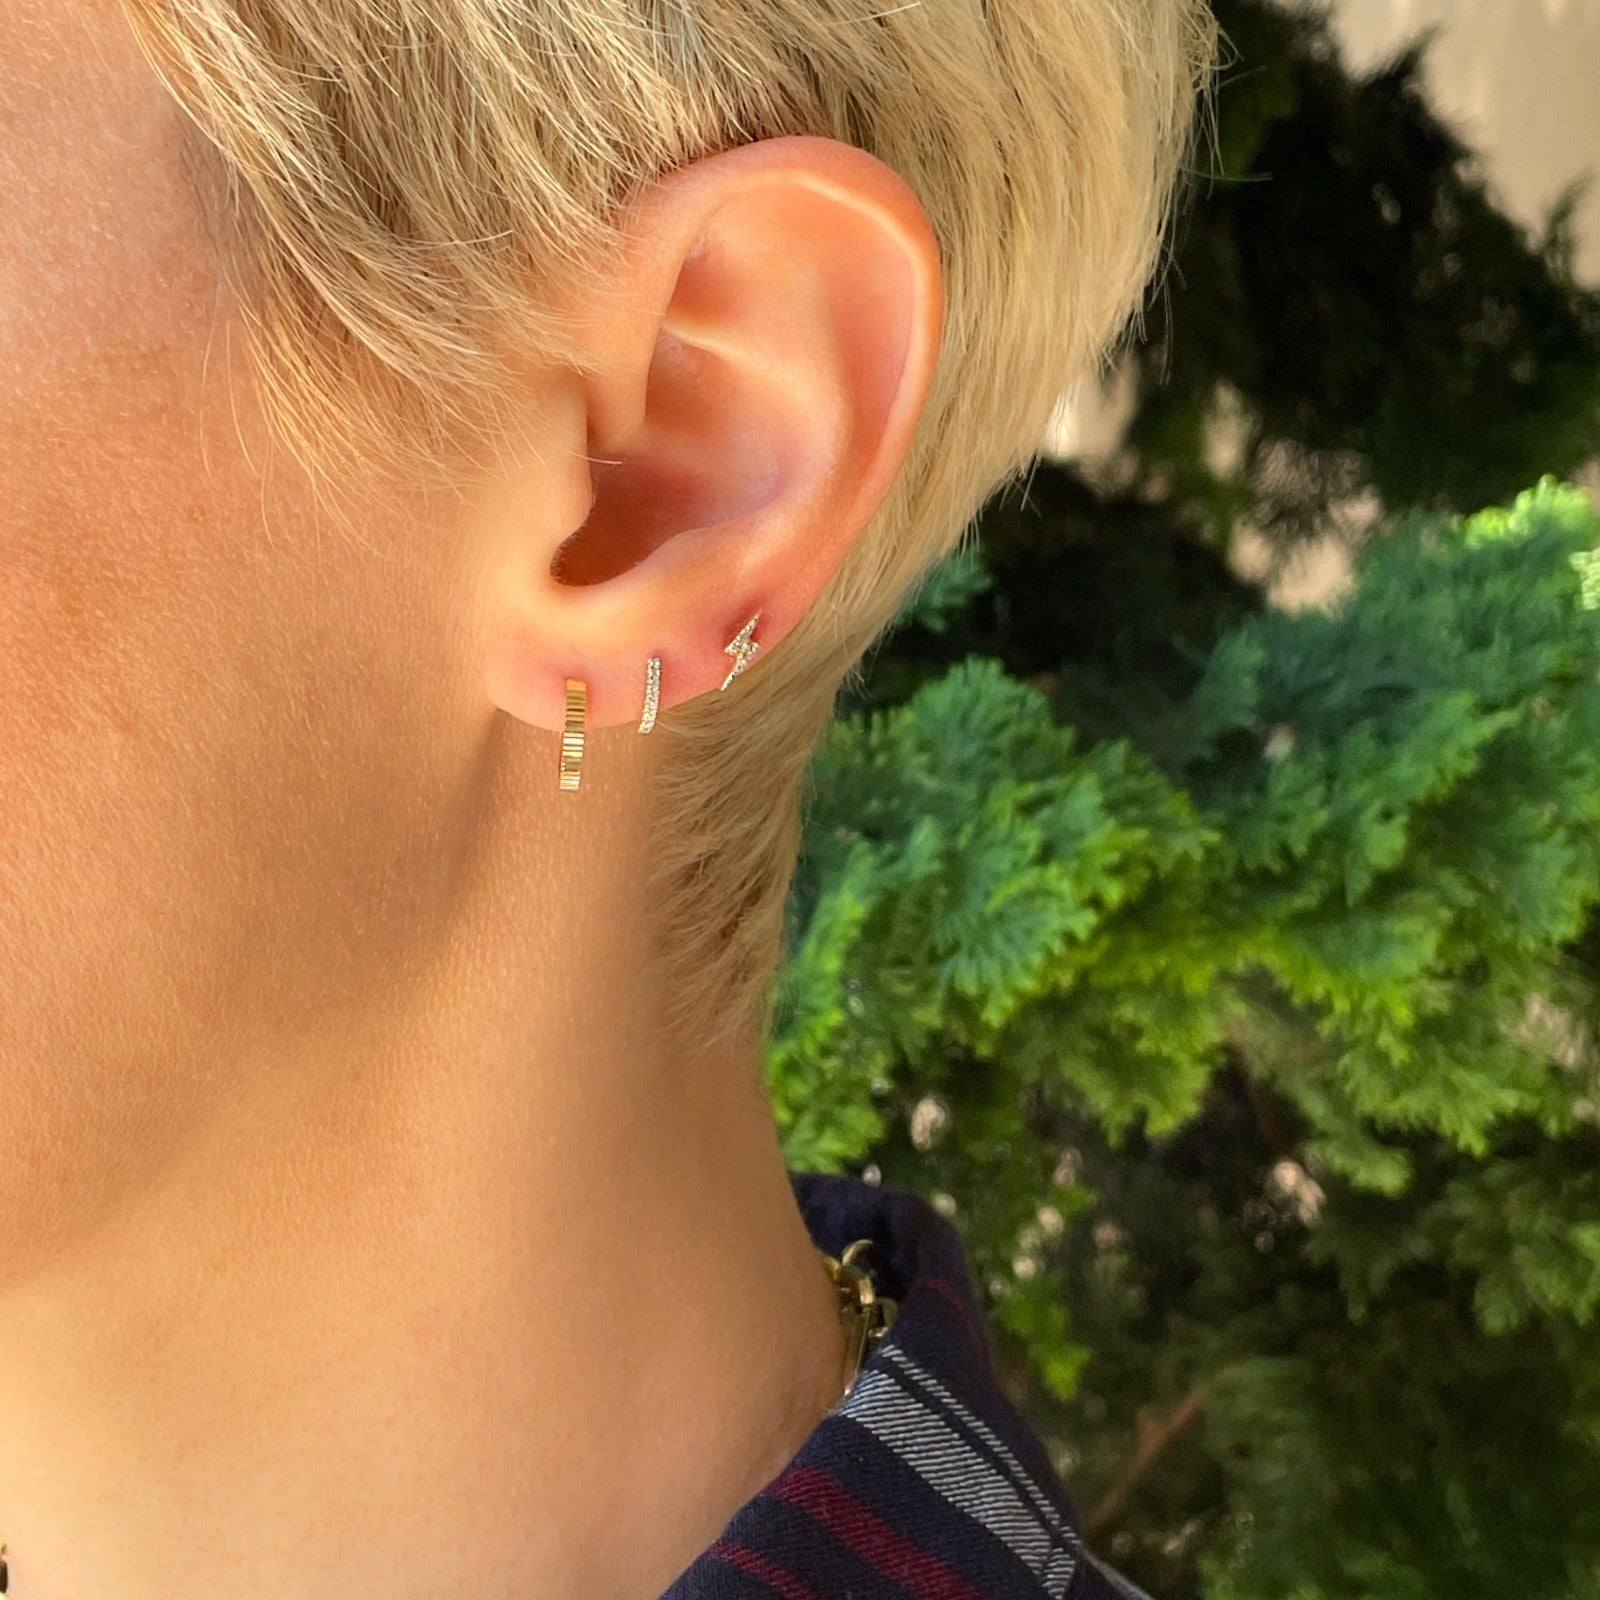 14k gold 9mm Diamond Pavé Hoop Earrings styled on a ear